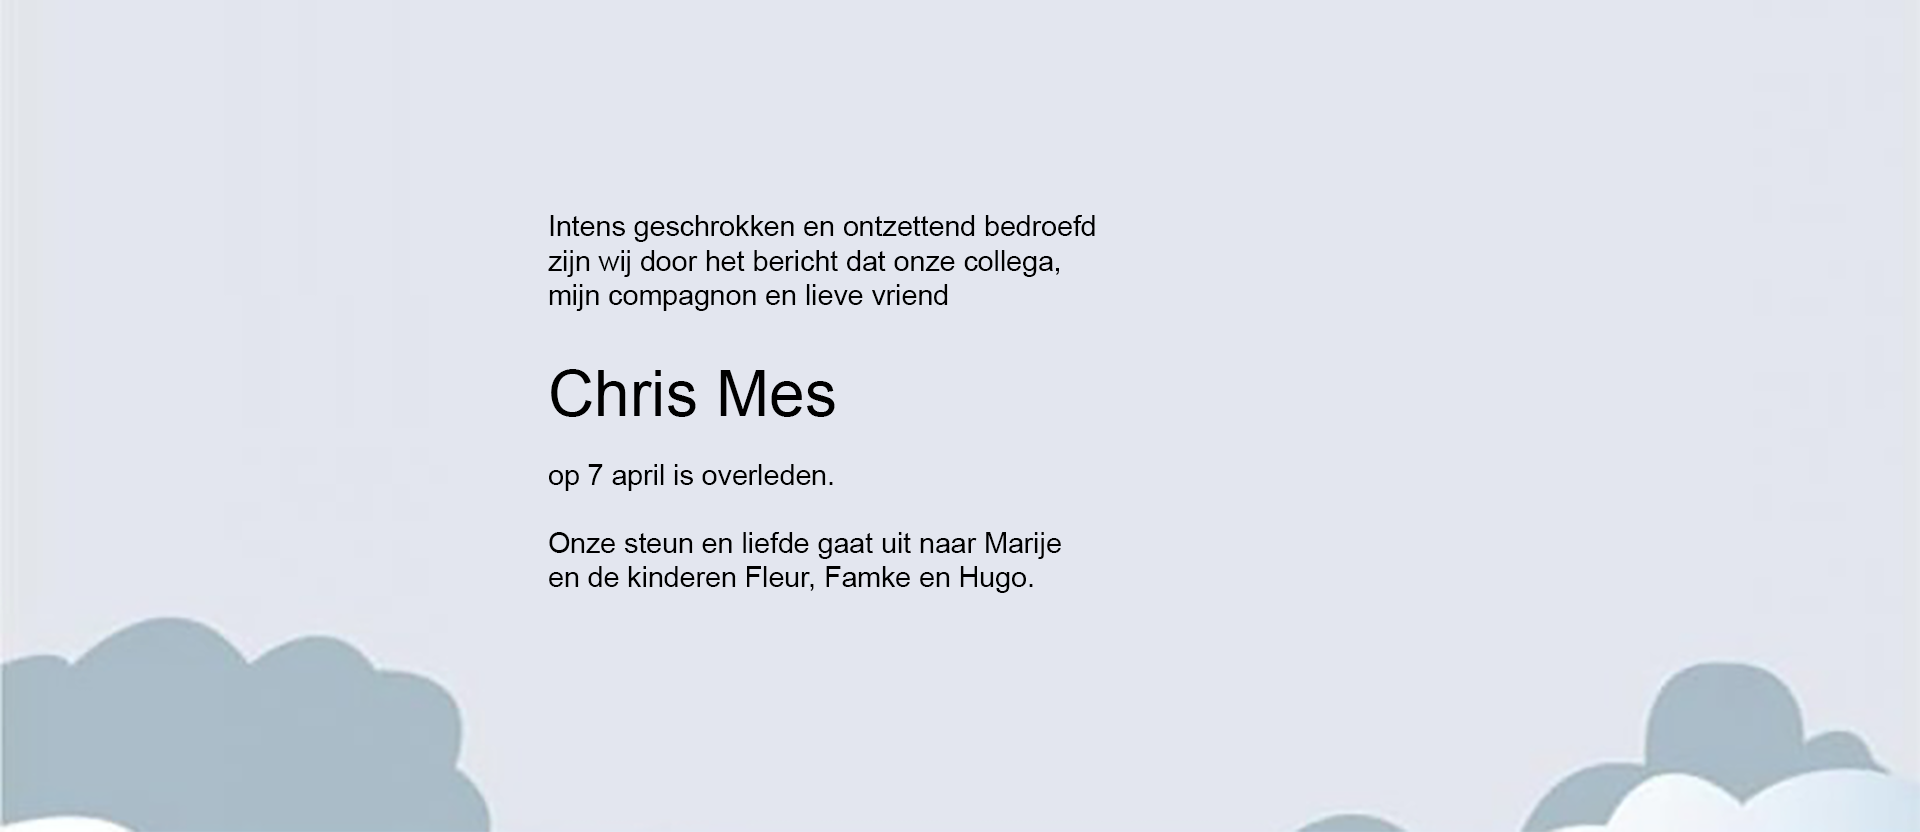 Chris Mes